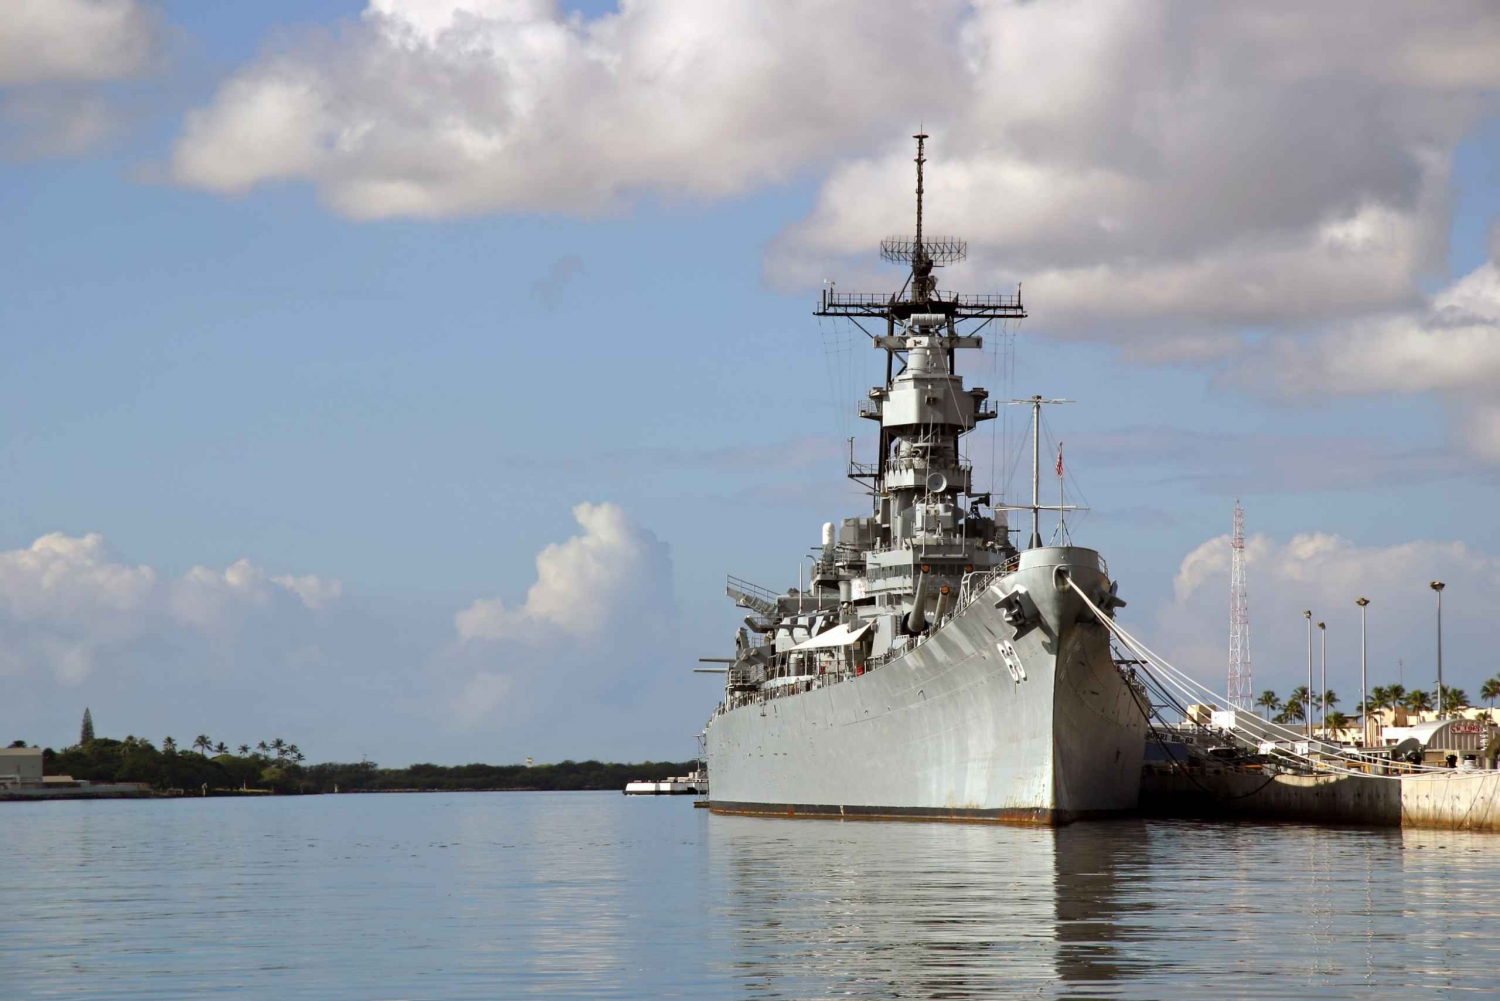 Oahu: Might Mo, & Honolulu Tour: Pearl Harbor, USS Arizona, Might Mo, & Honolulu Tour